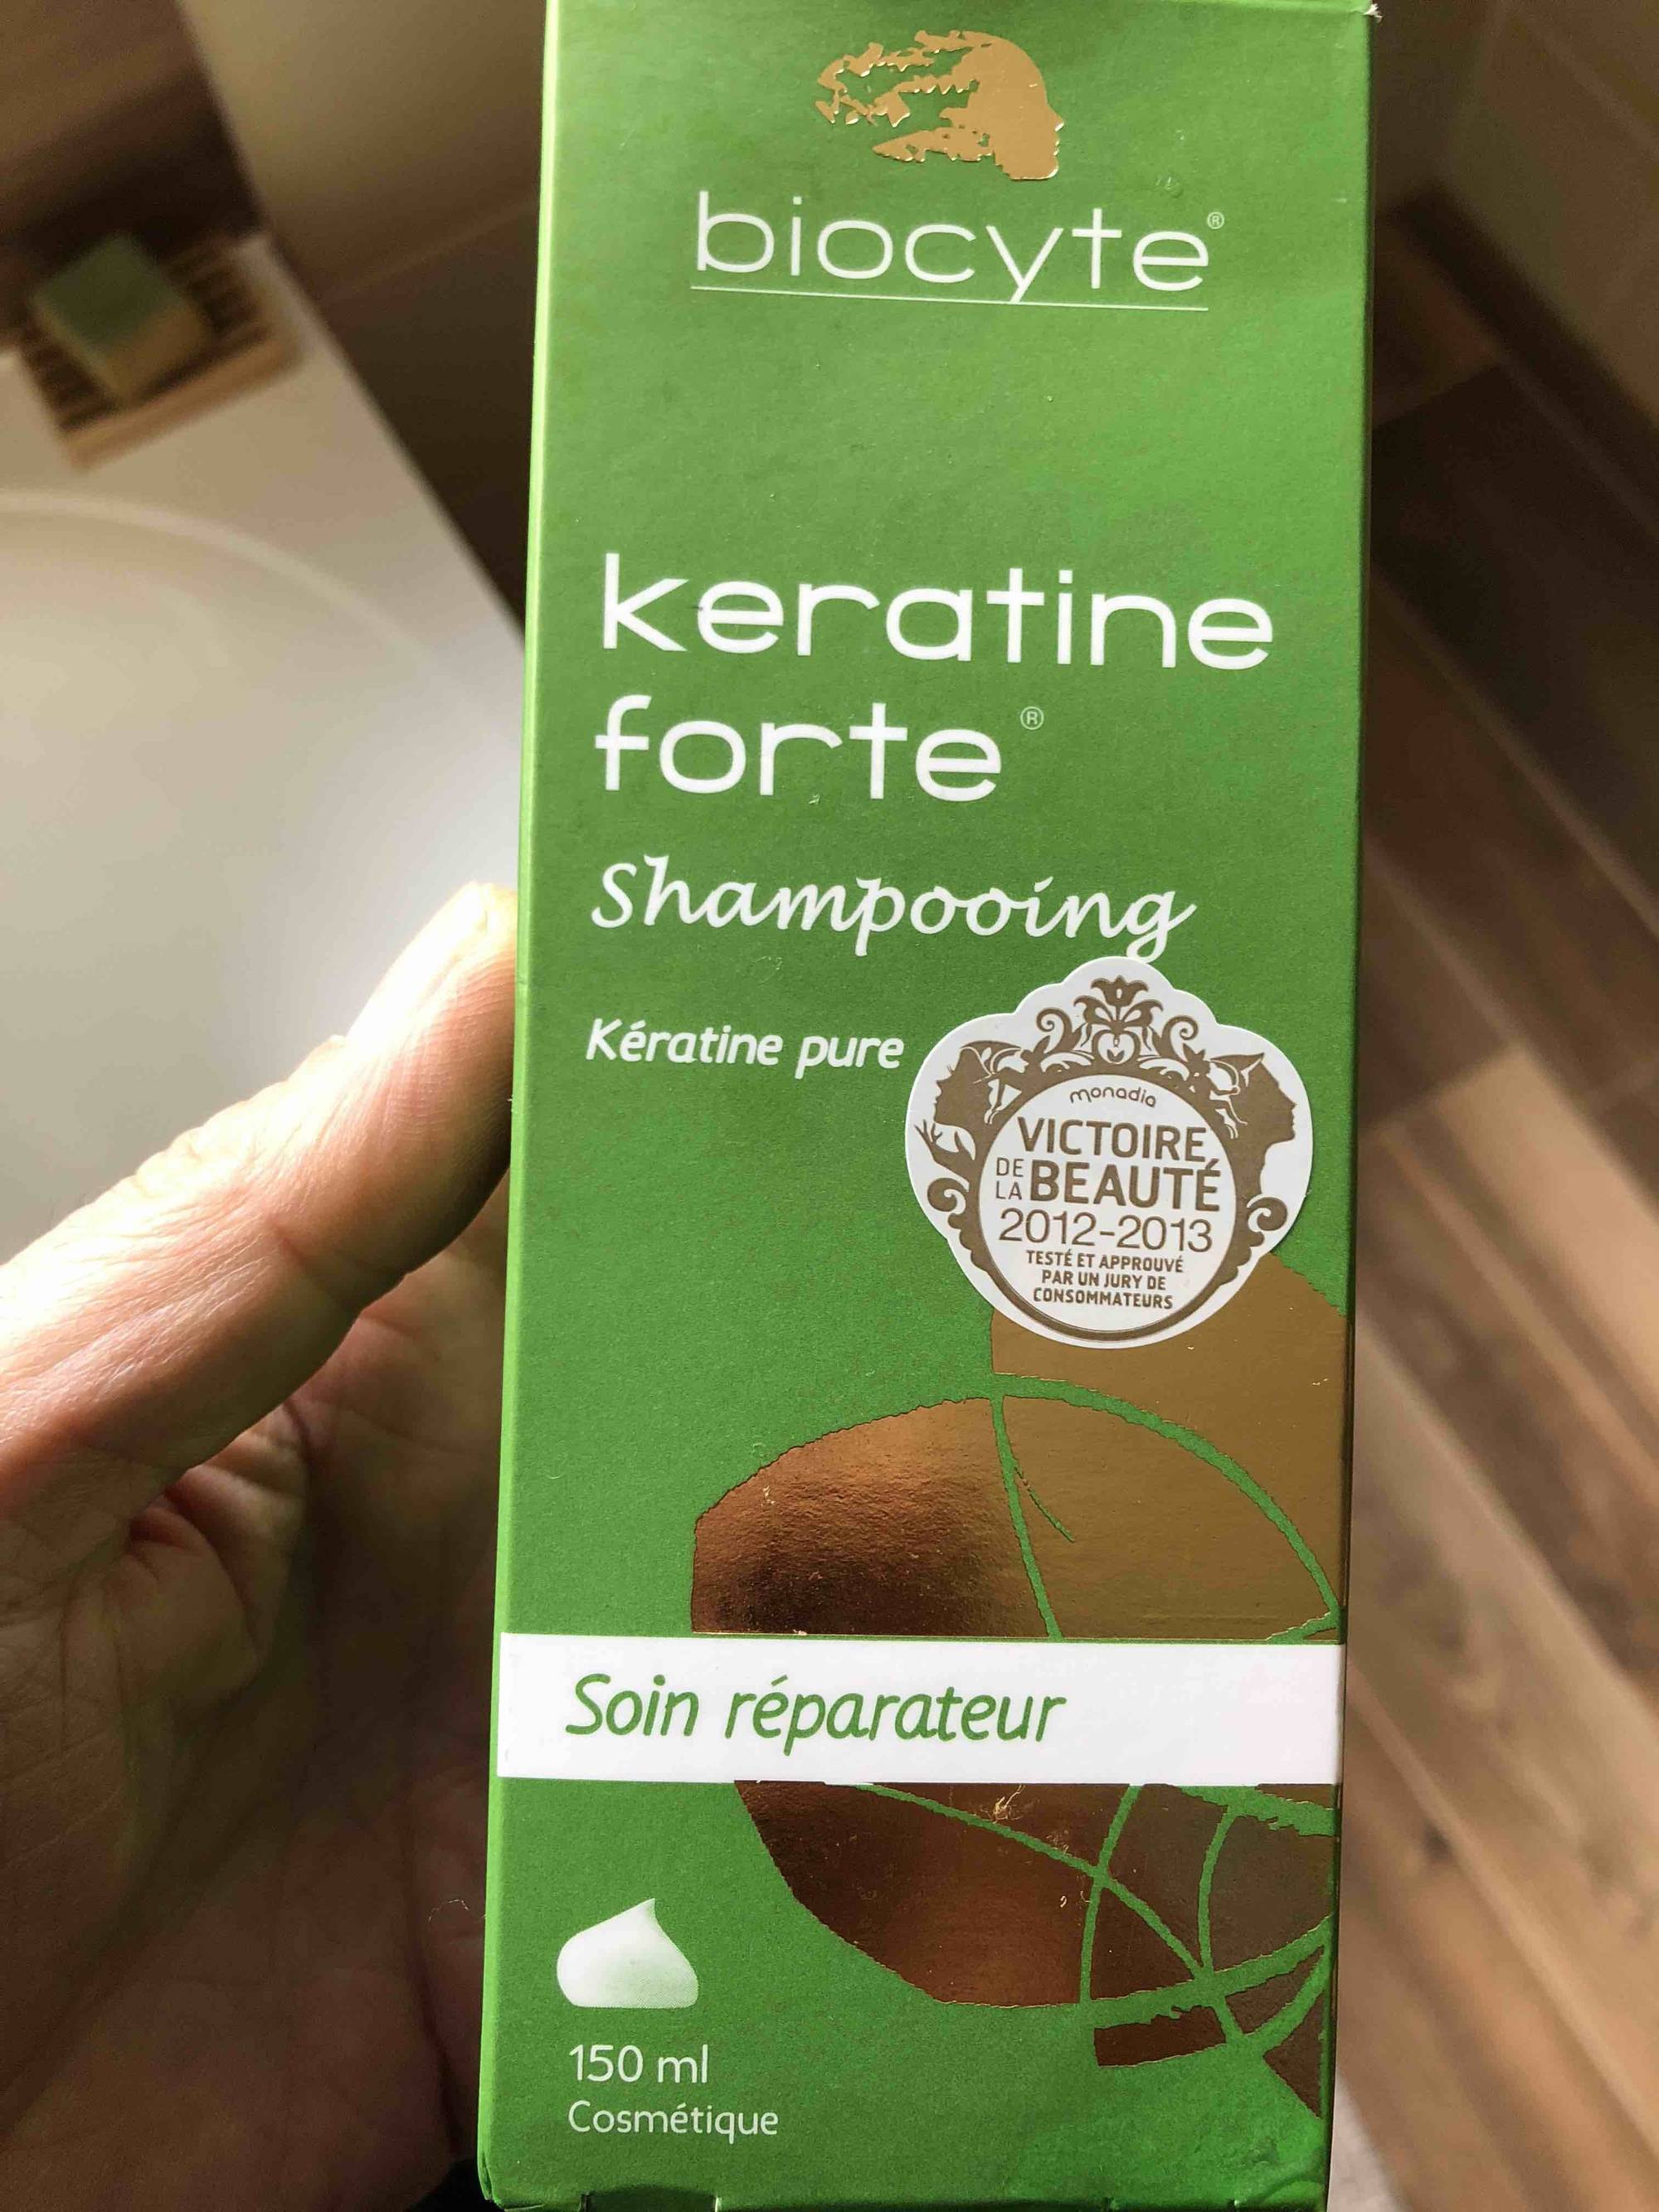 BIOCYTE - Keratine forte - Shampooing soin réparateur